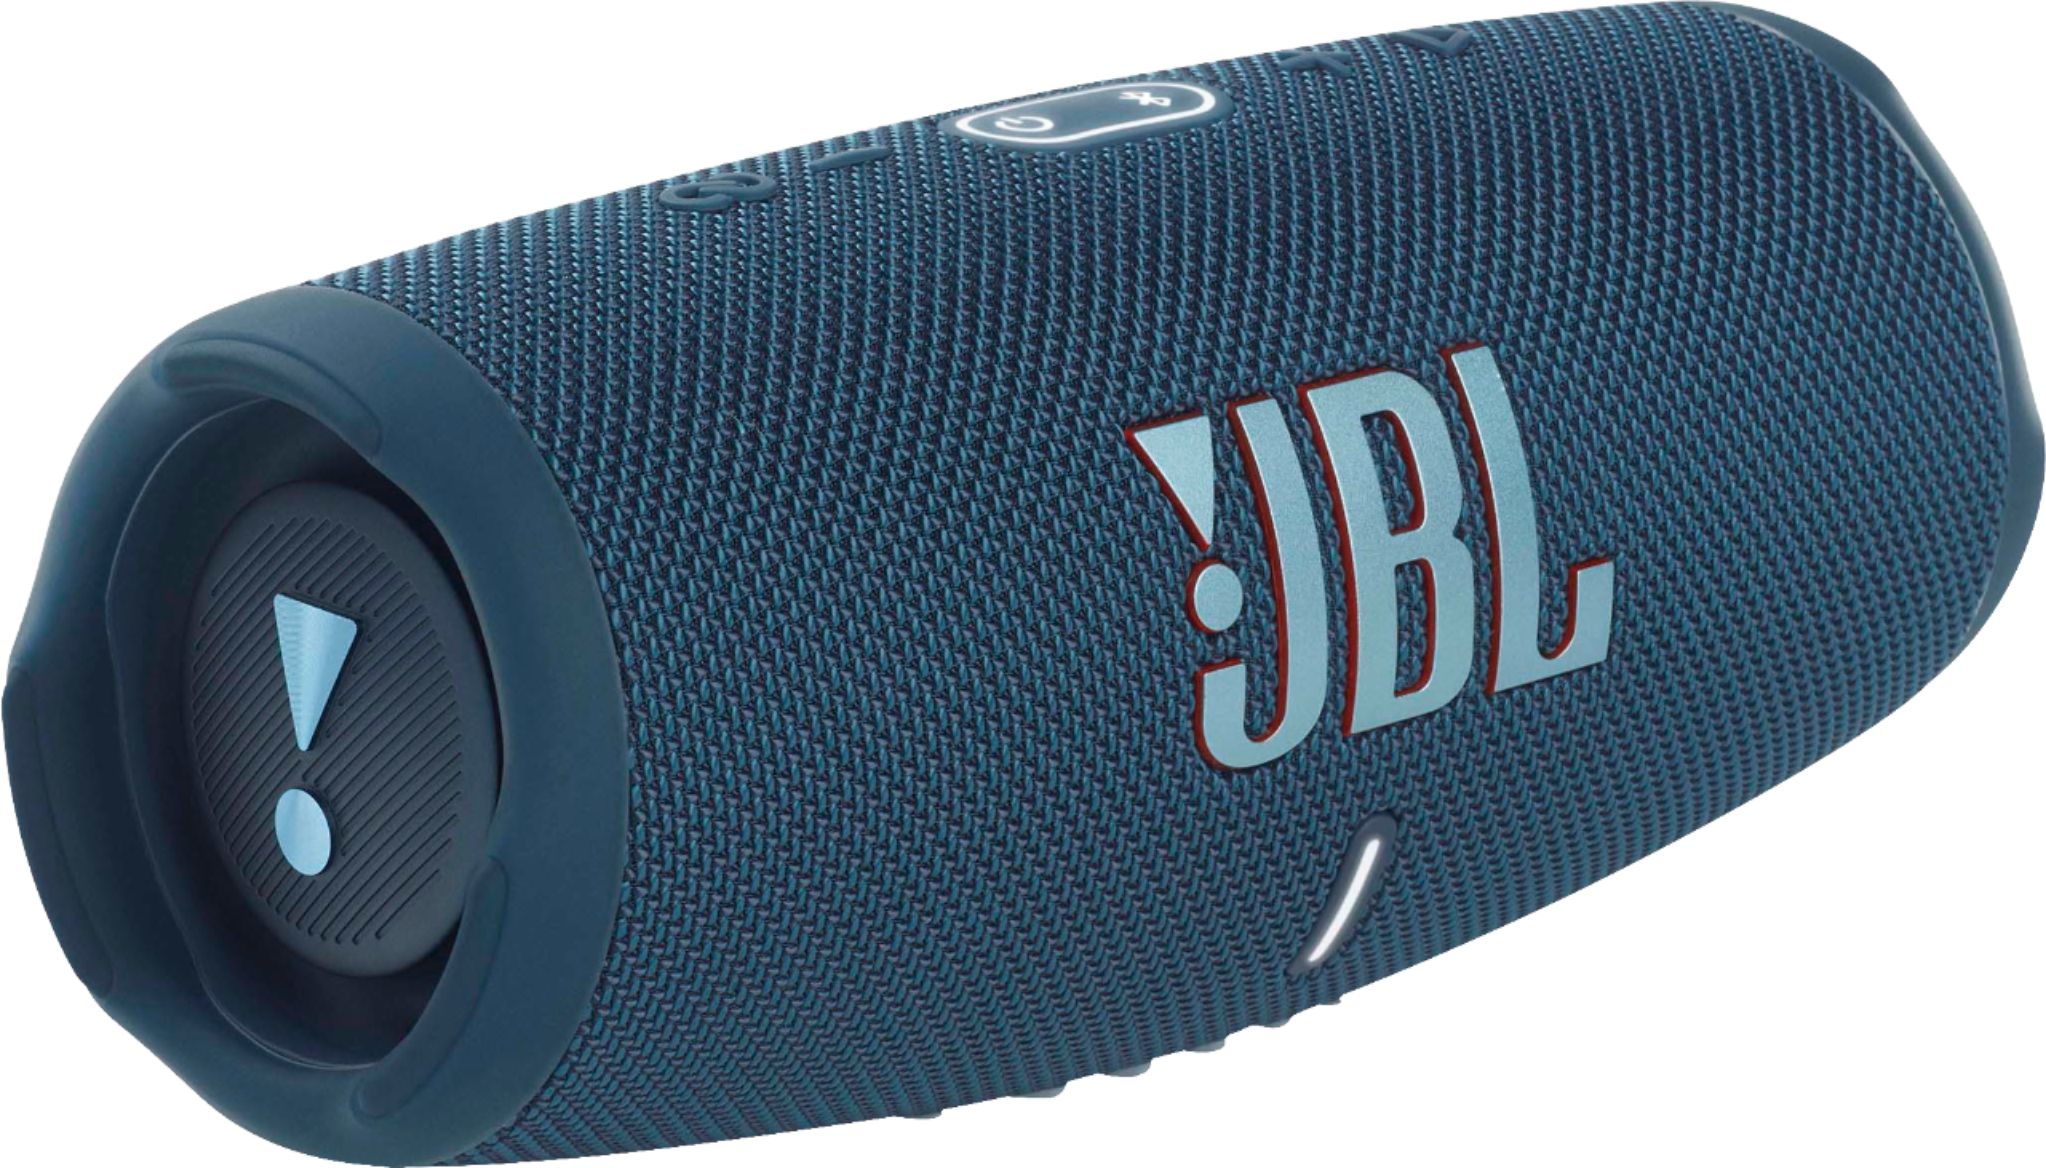 JBL Xtreme 2 Portable Bluetooth Speaker Blue JBLXTREME2BLUAM - Best Buy